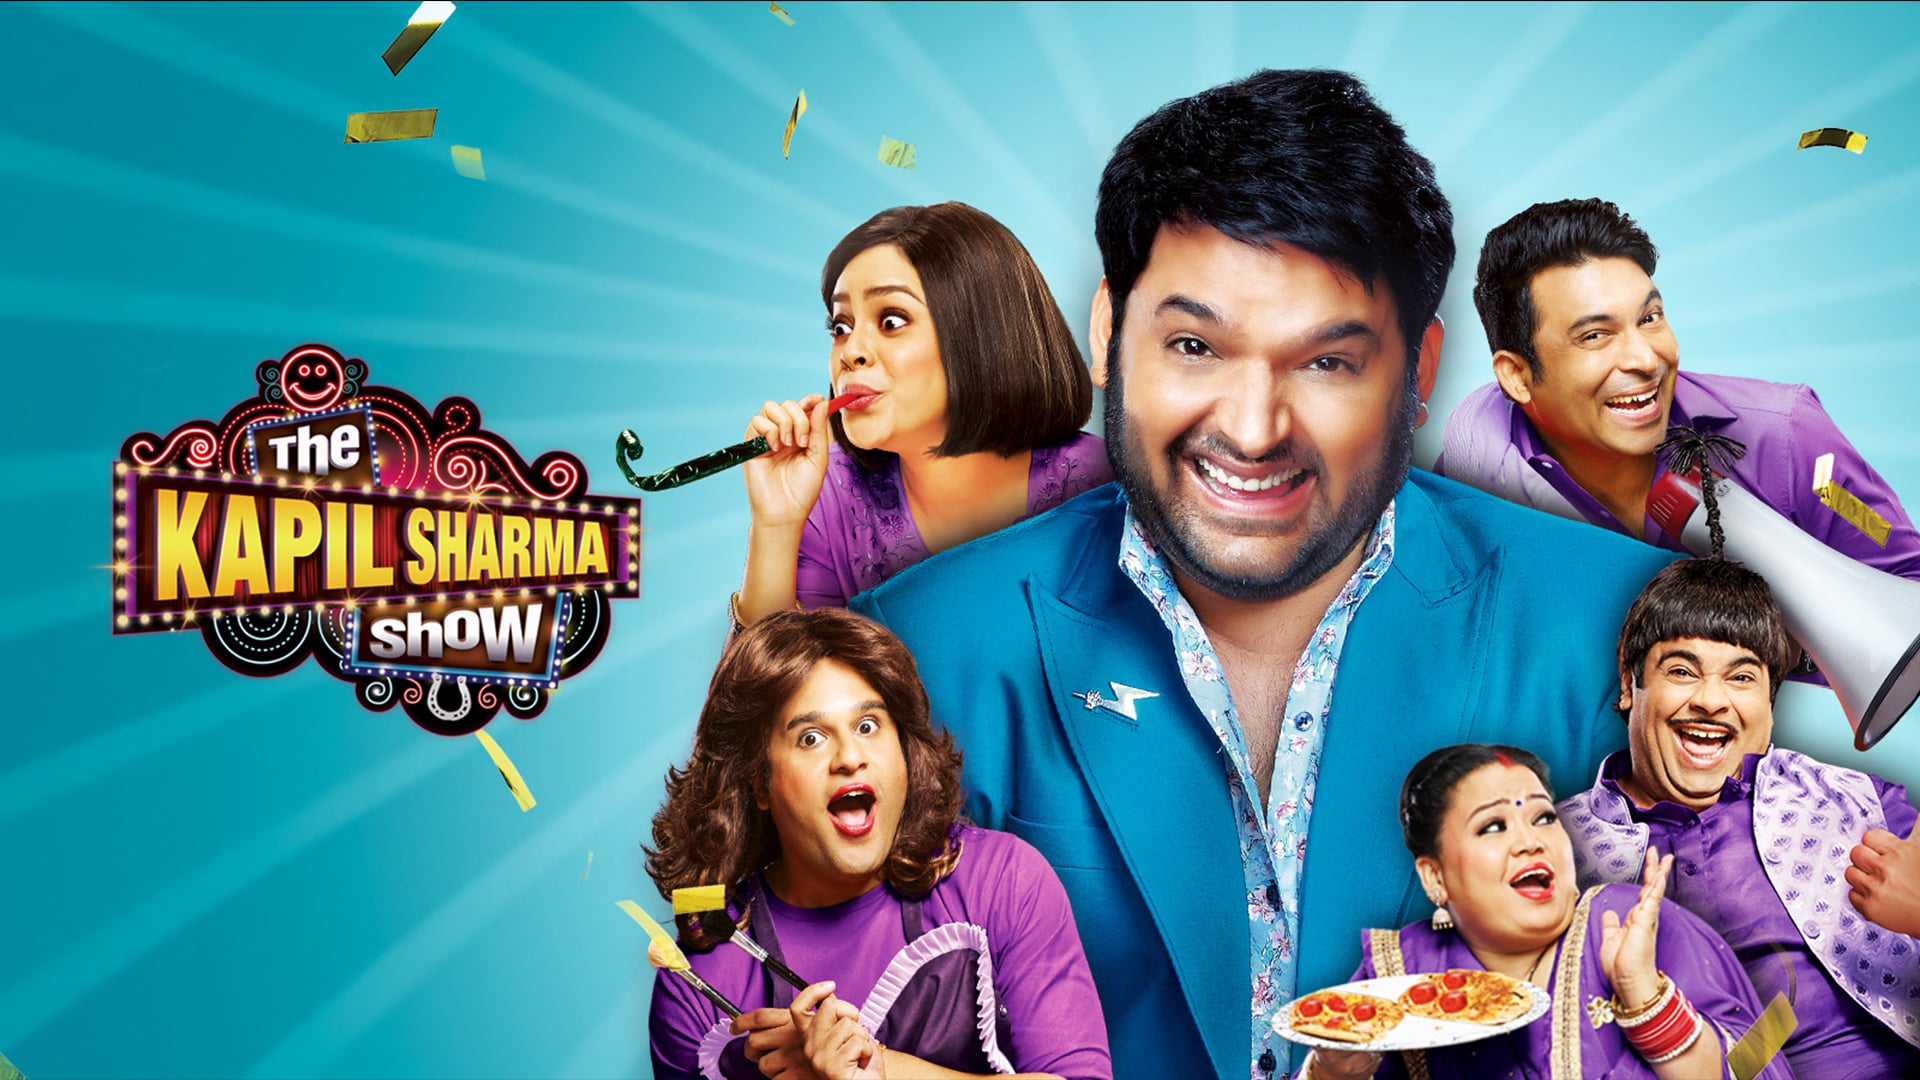 The Kapil Sharma Show - Season 2 Episode 5 : Amazing Super-Duo Yami Gautam And Vicky Kaushal